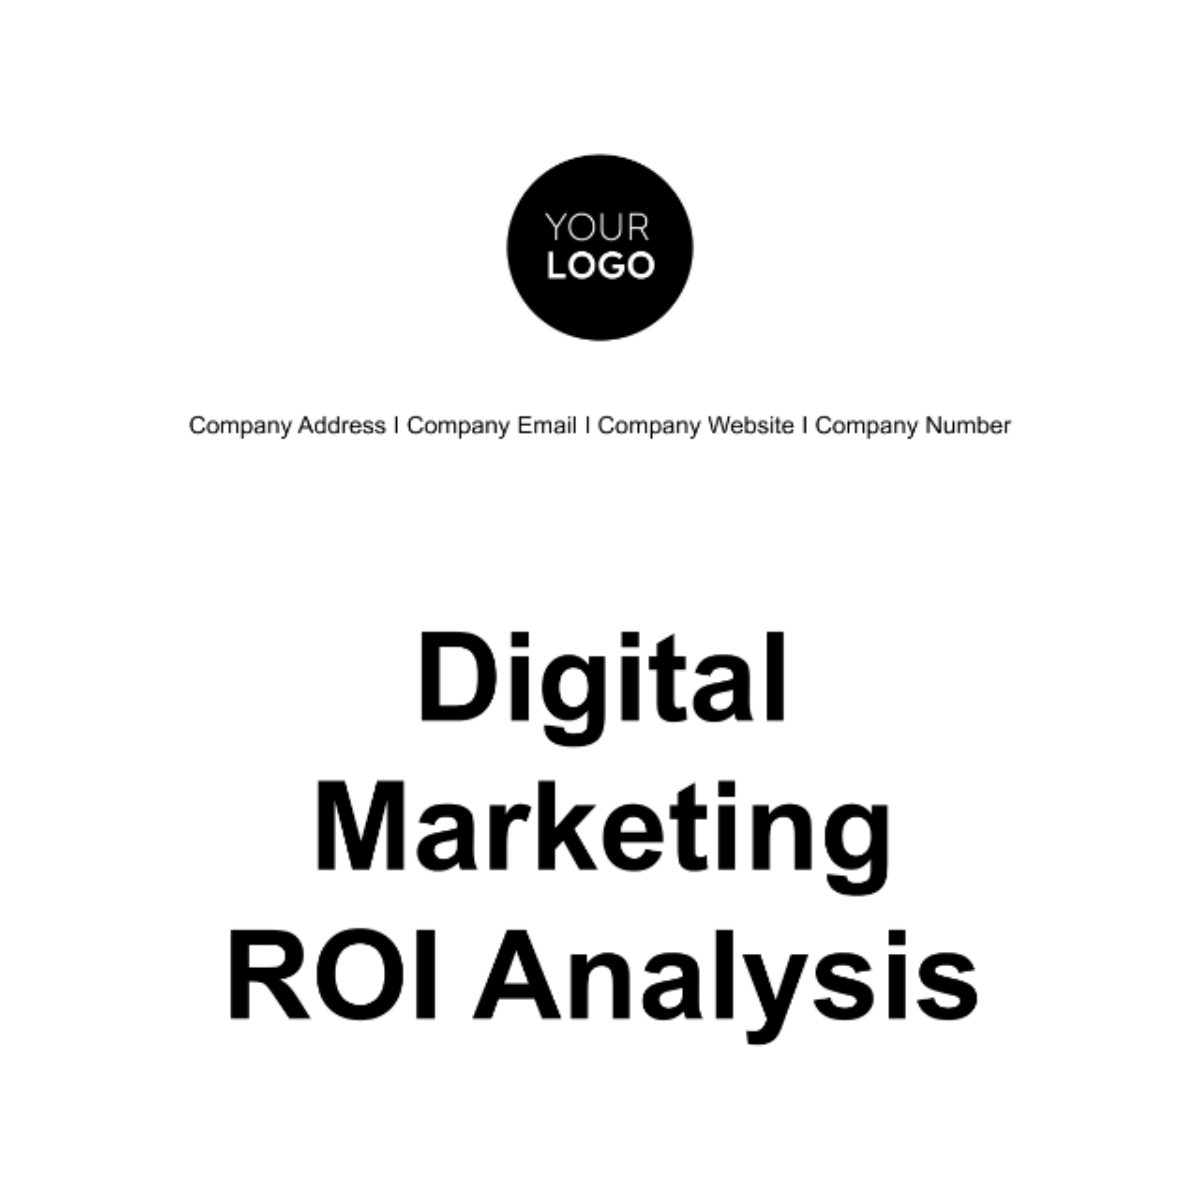 Free Digital Marketing ROI Analysis Template